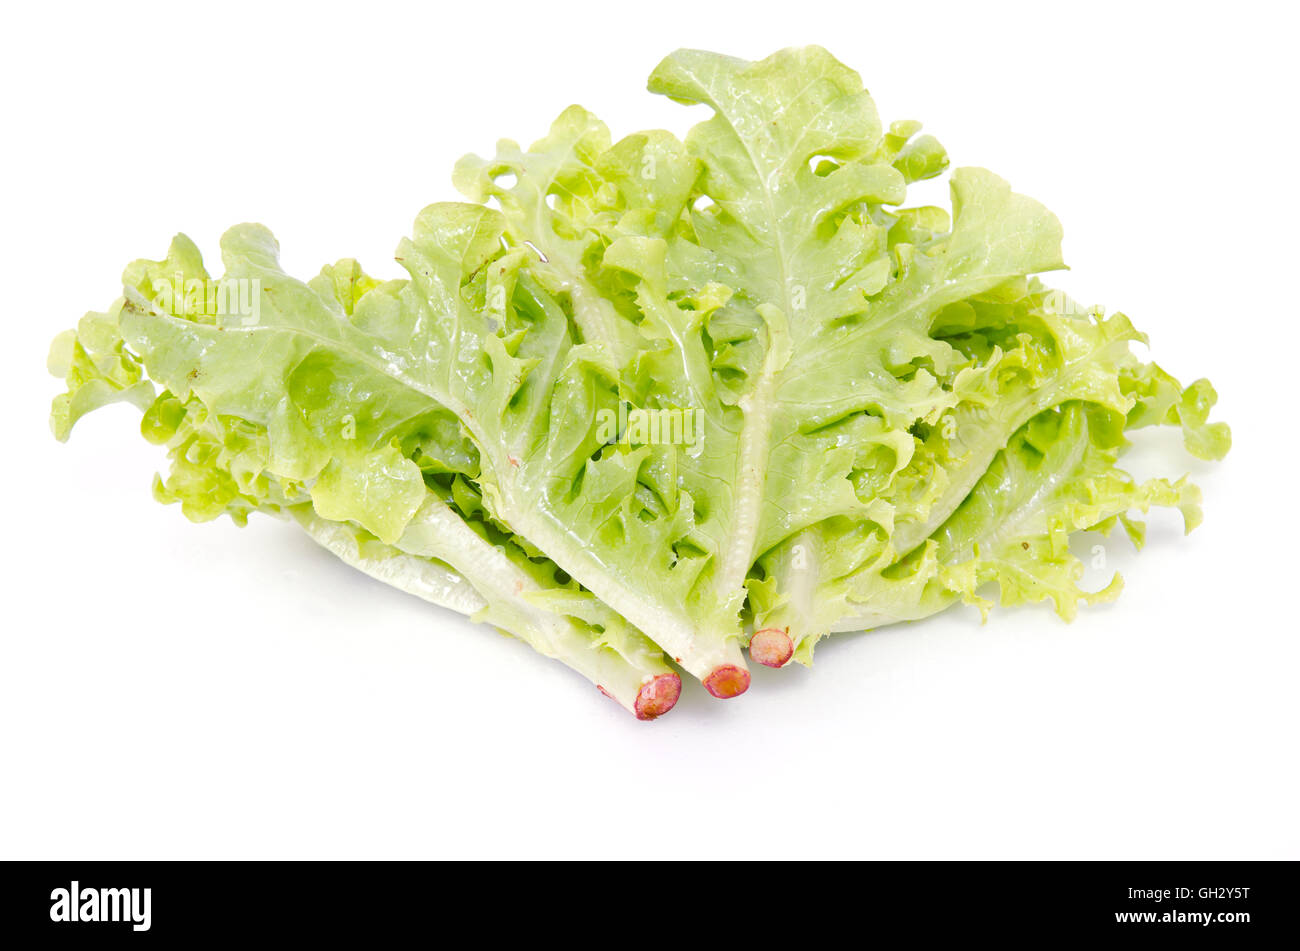 Salad vegetable leaf (Green oak and Batavia) isolated on white background Stock Photo